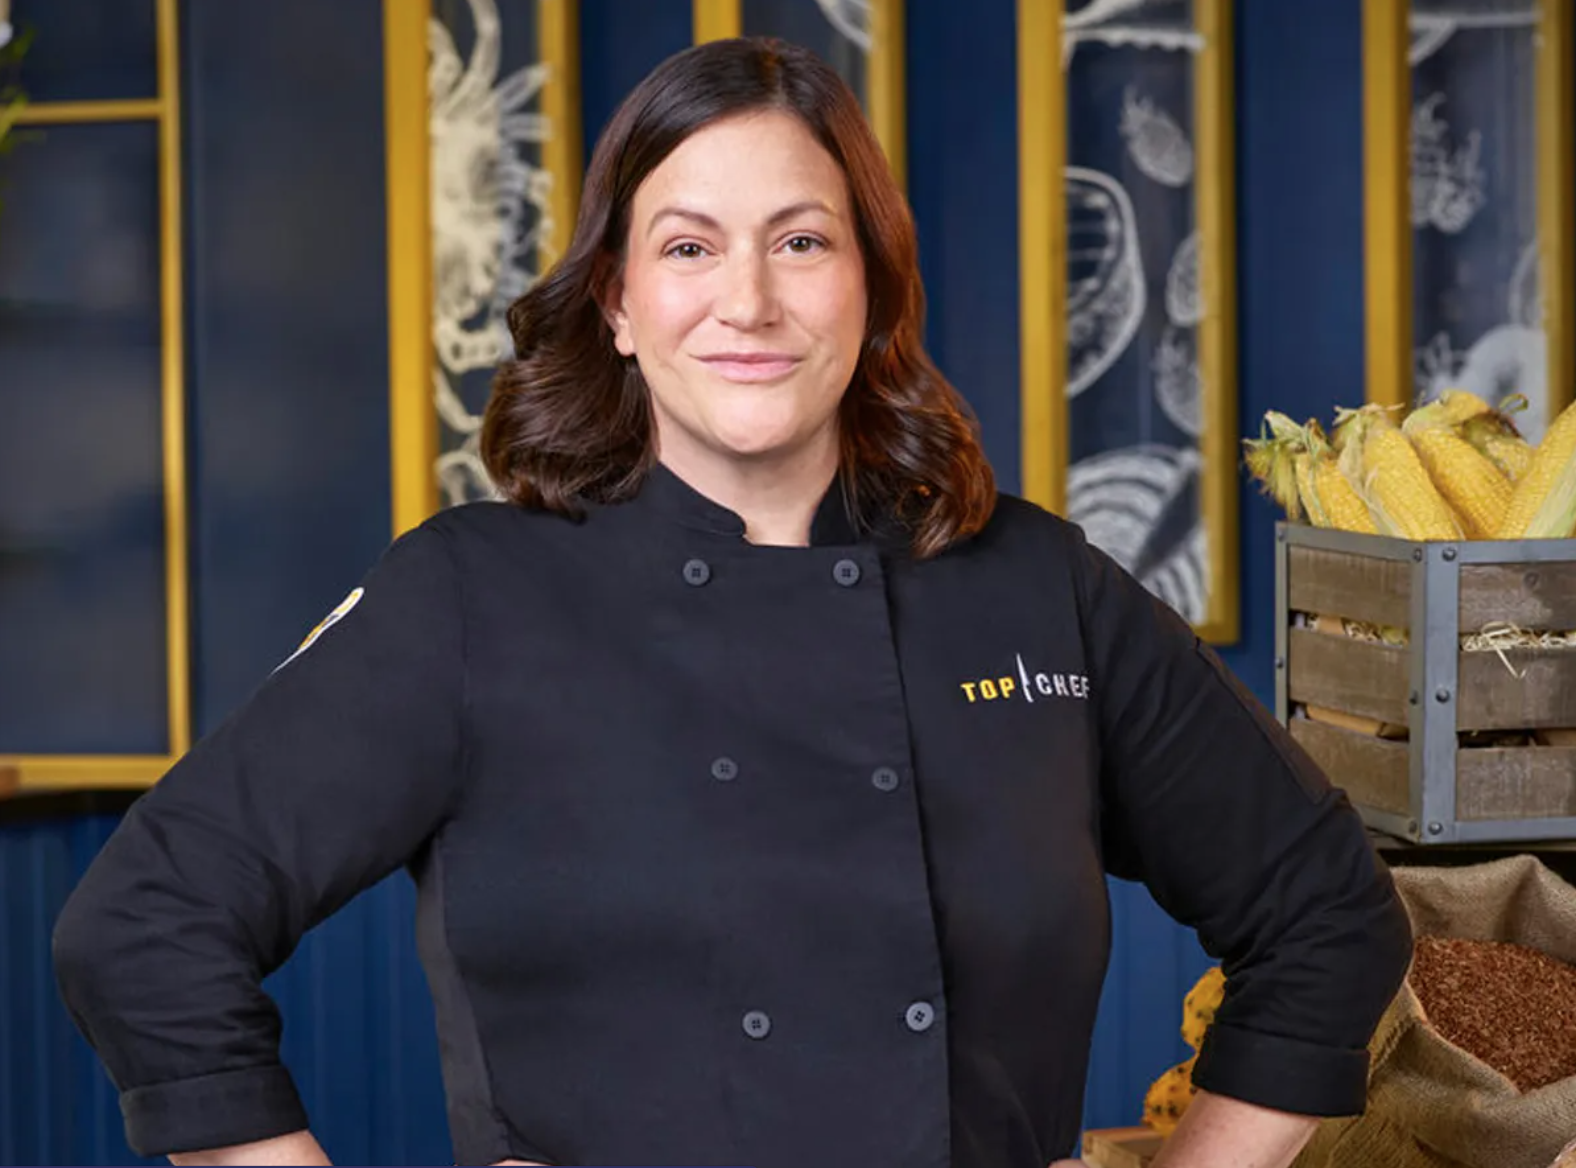 Paducah Life | Chef Sara Bradley | On Top of the World